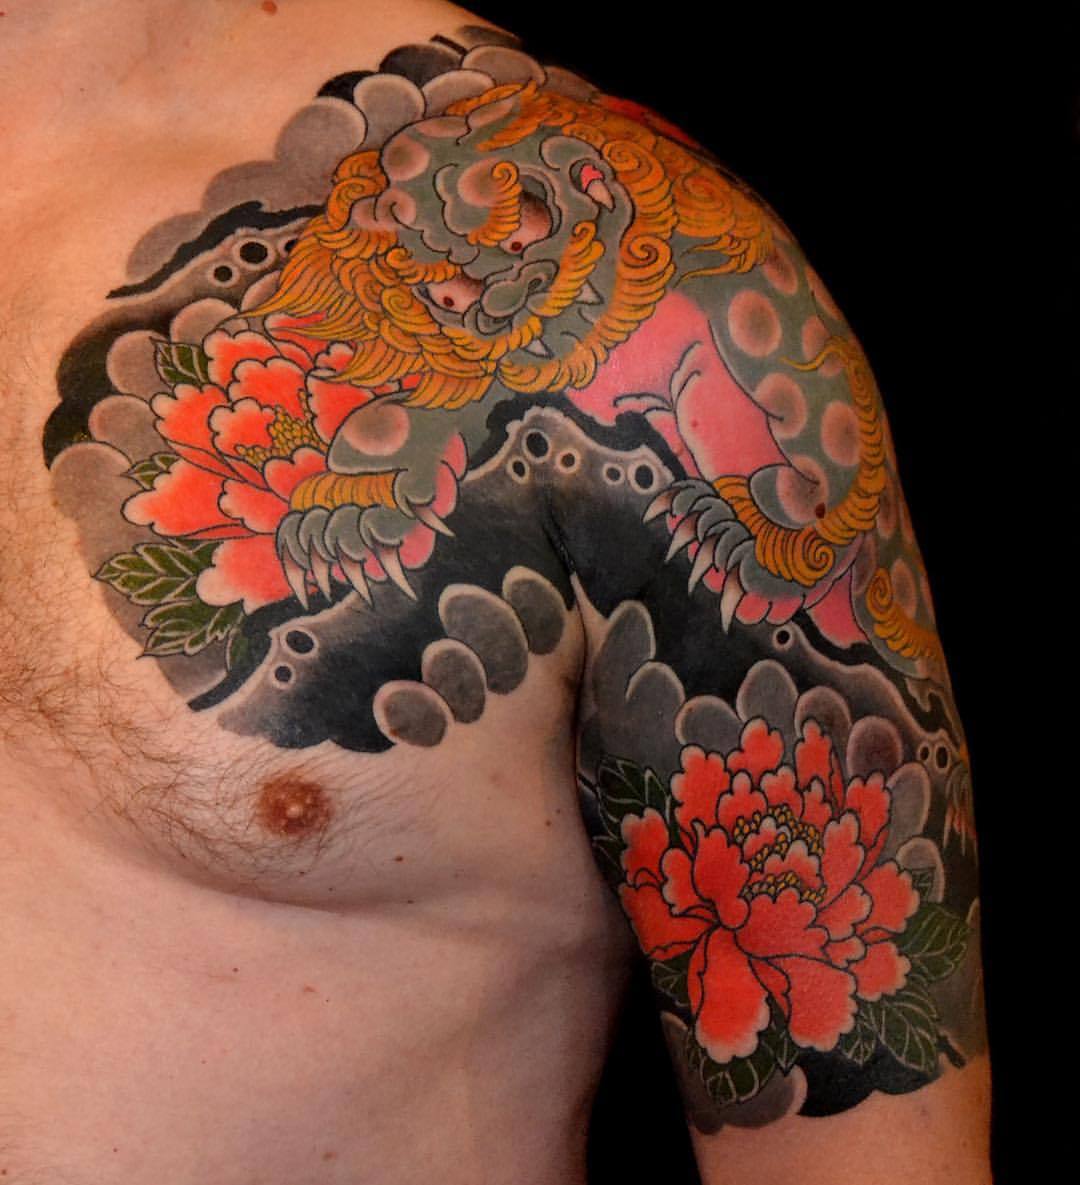 Aaron Bell Tattoos — Finished this shishi botan tattoo today #shishi...